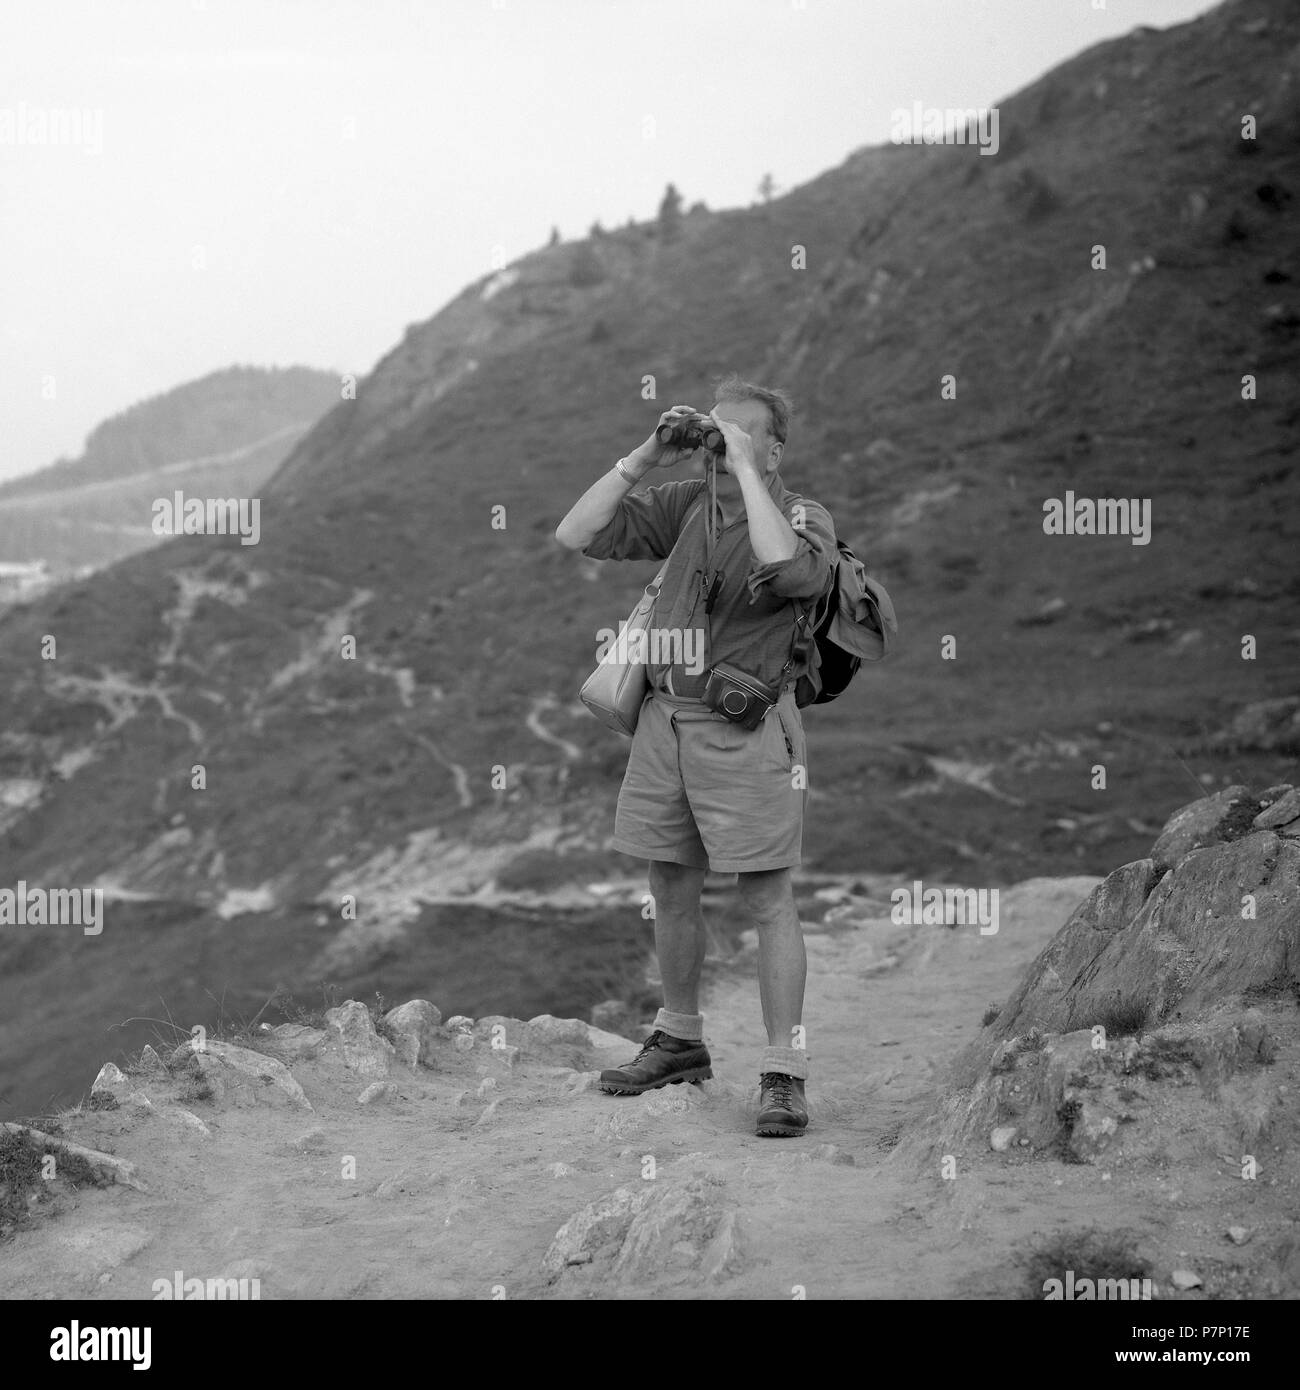 Man standing on a mountain path looking through binoculars, ca. 1950, near Freiburg, Germany Stock Photo